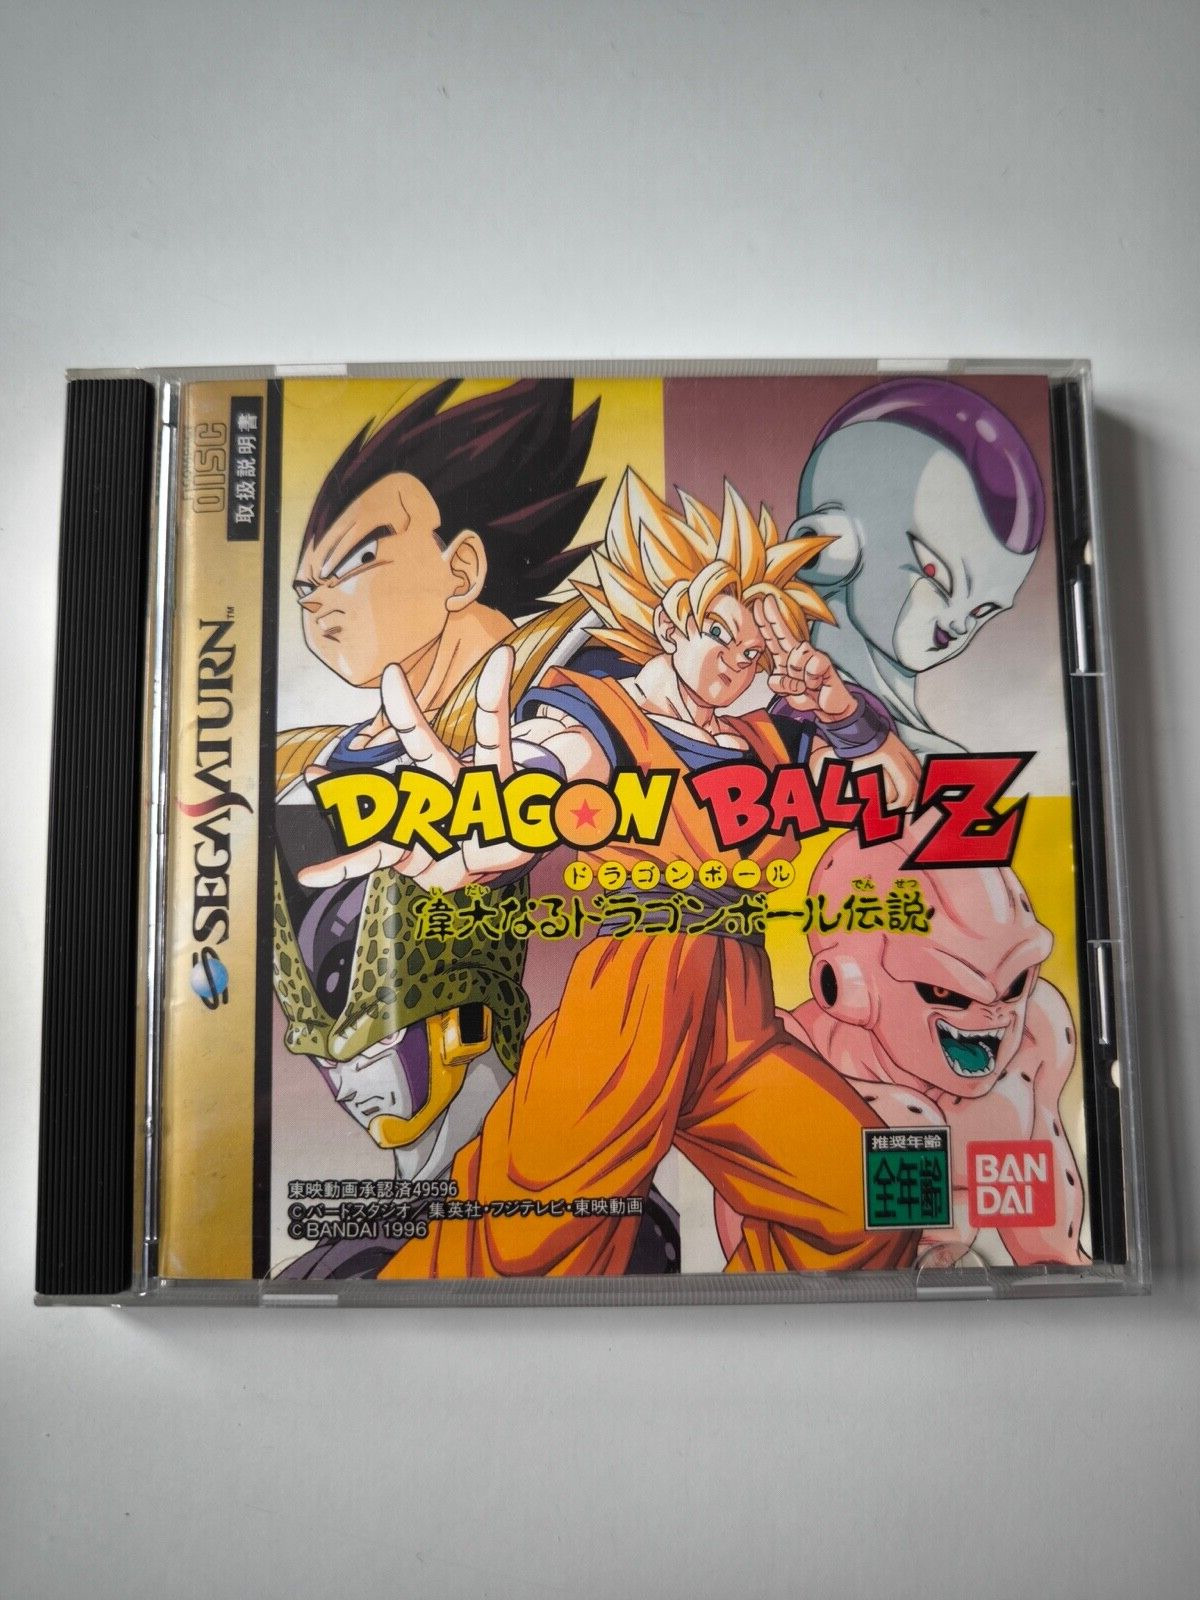 Dragon Ball Z Legend idainaru densetsu Sega Saturn - 1996 version jap